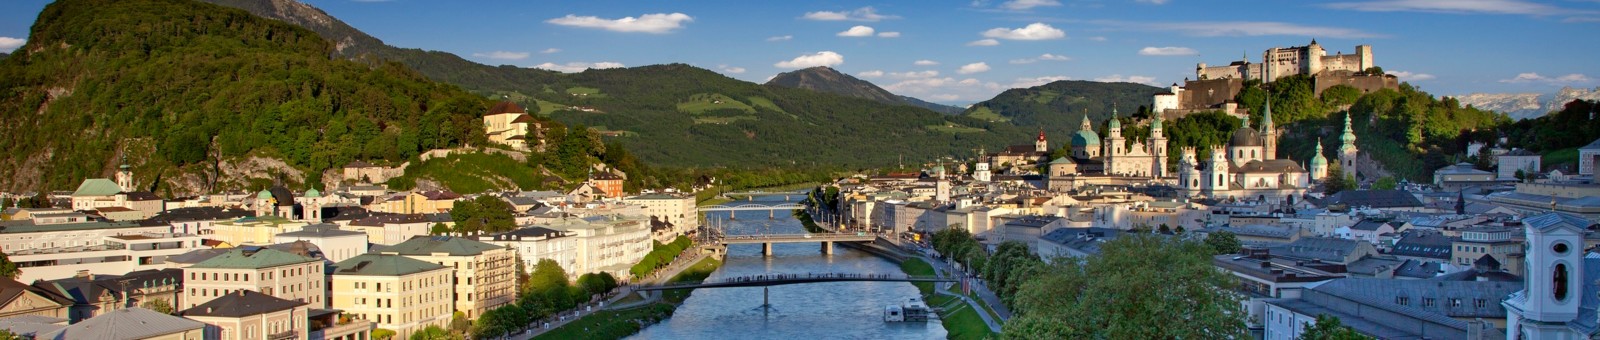     The city of Salzburg 